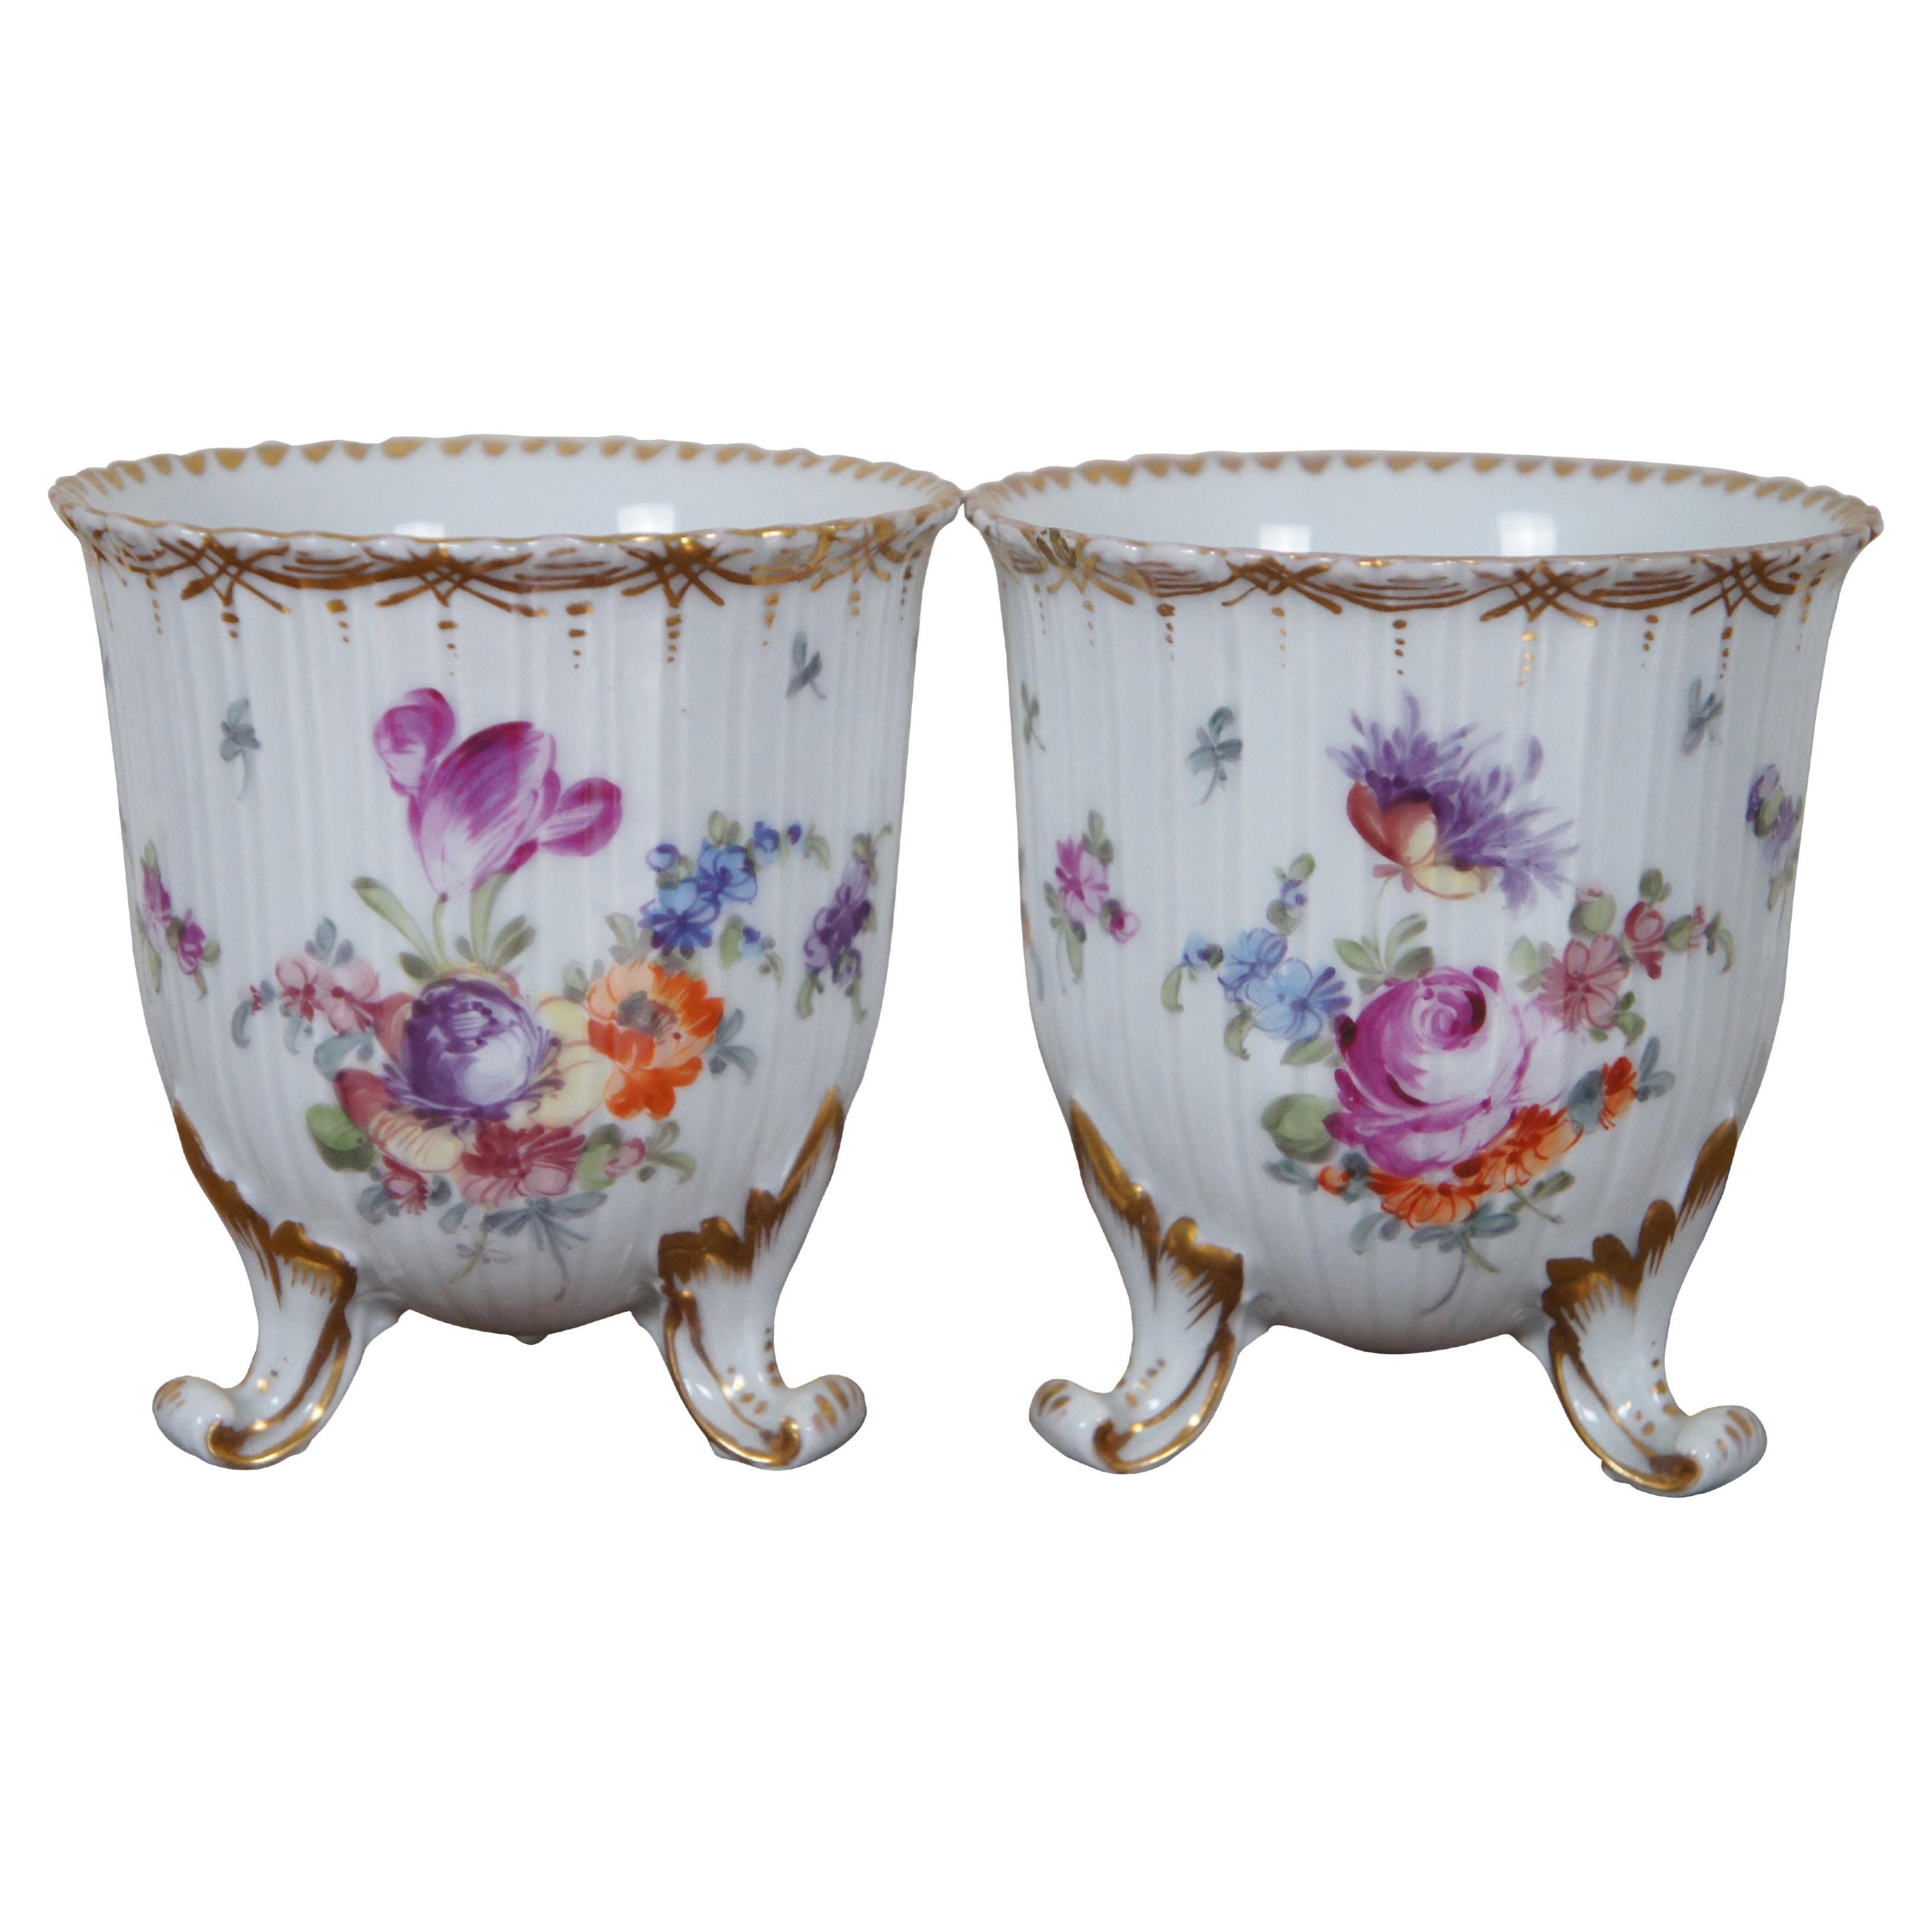 2 Franziska Hirsch Dresden Porcelain Polychrome Floral Vase Cachepots Pair 4" For Sale